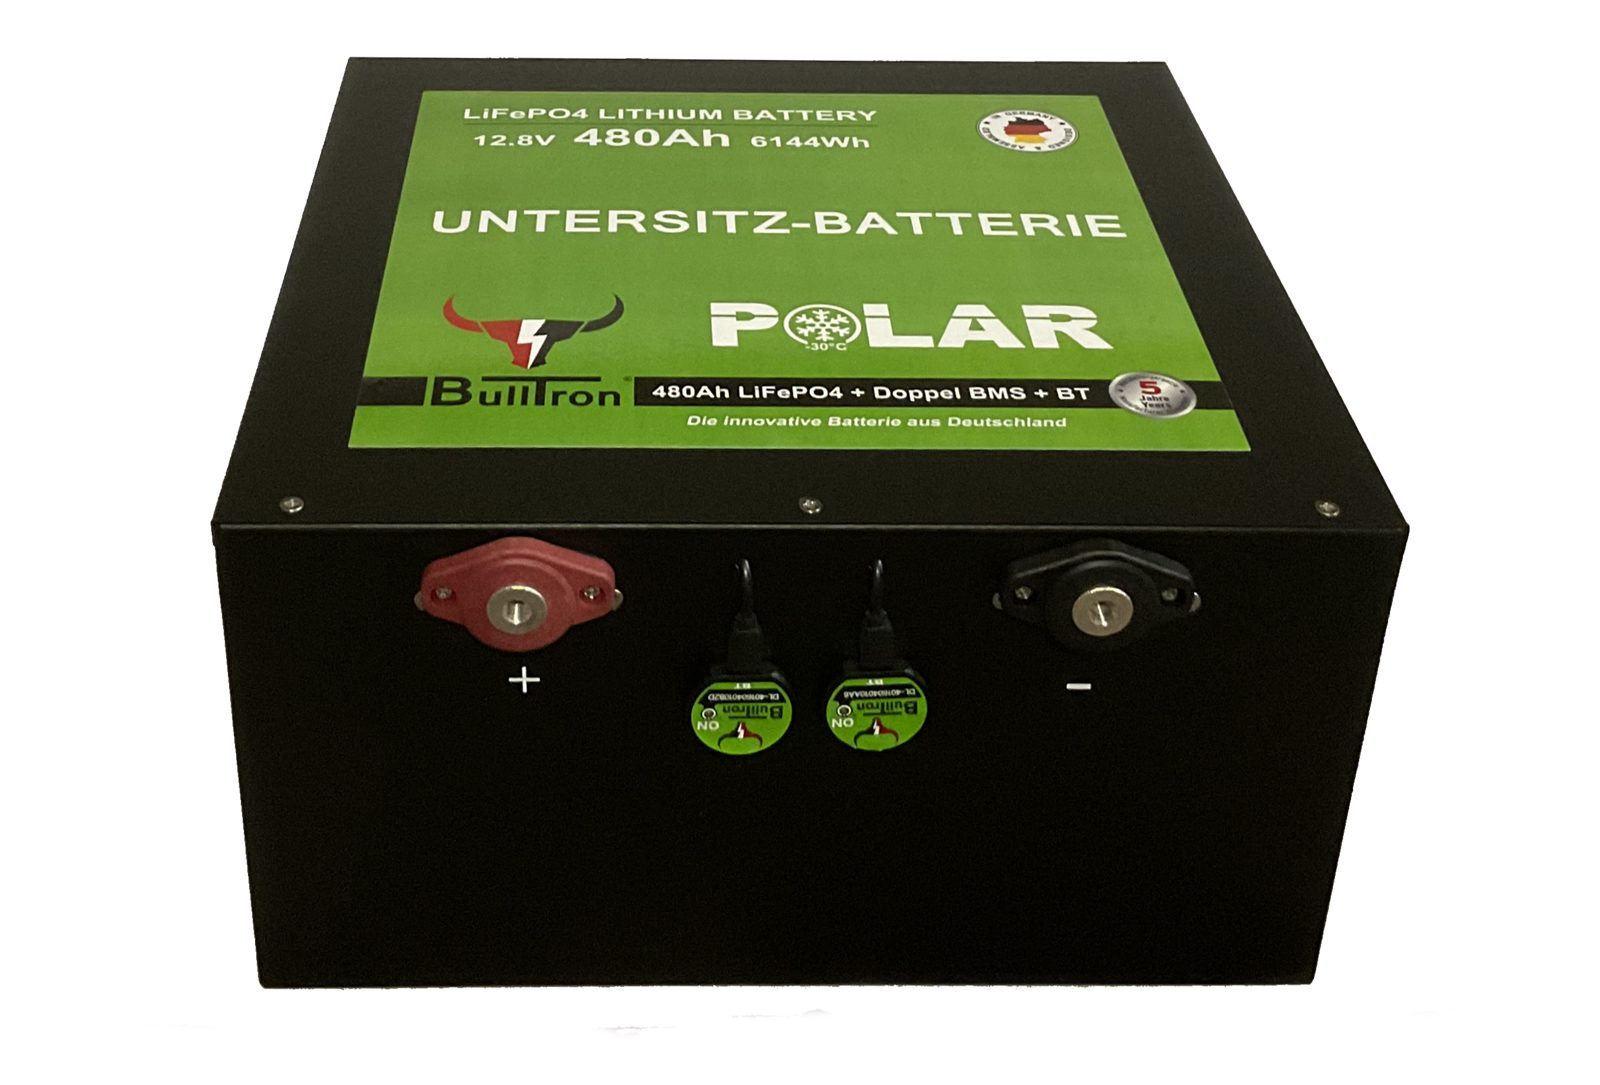 BullTron Batteriewächter 480Ah 12,8V Polar LiFePO4 Smart Doppel-BMS Bluetooth App Heizung